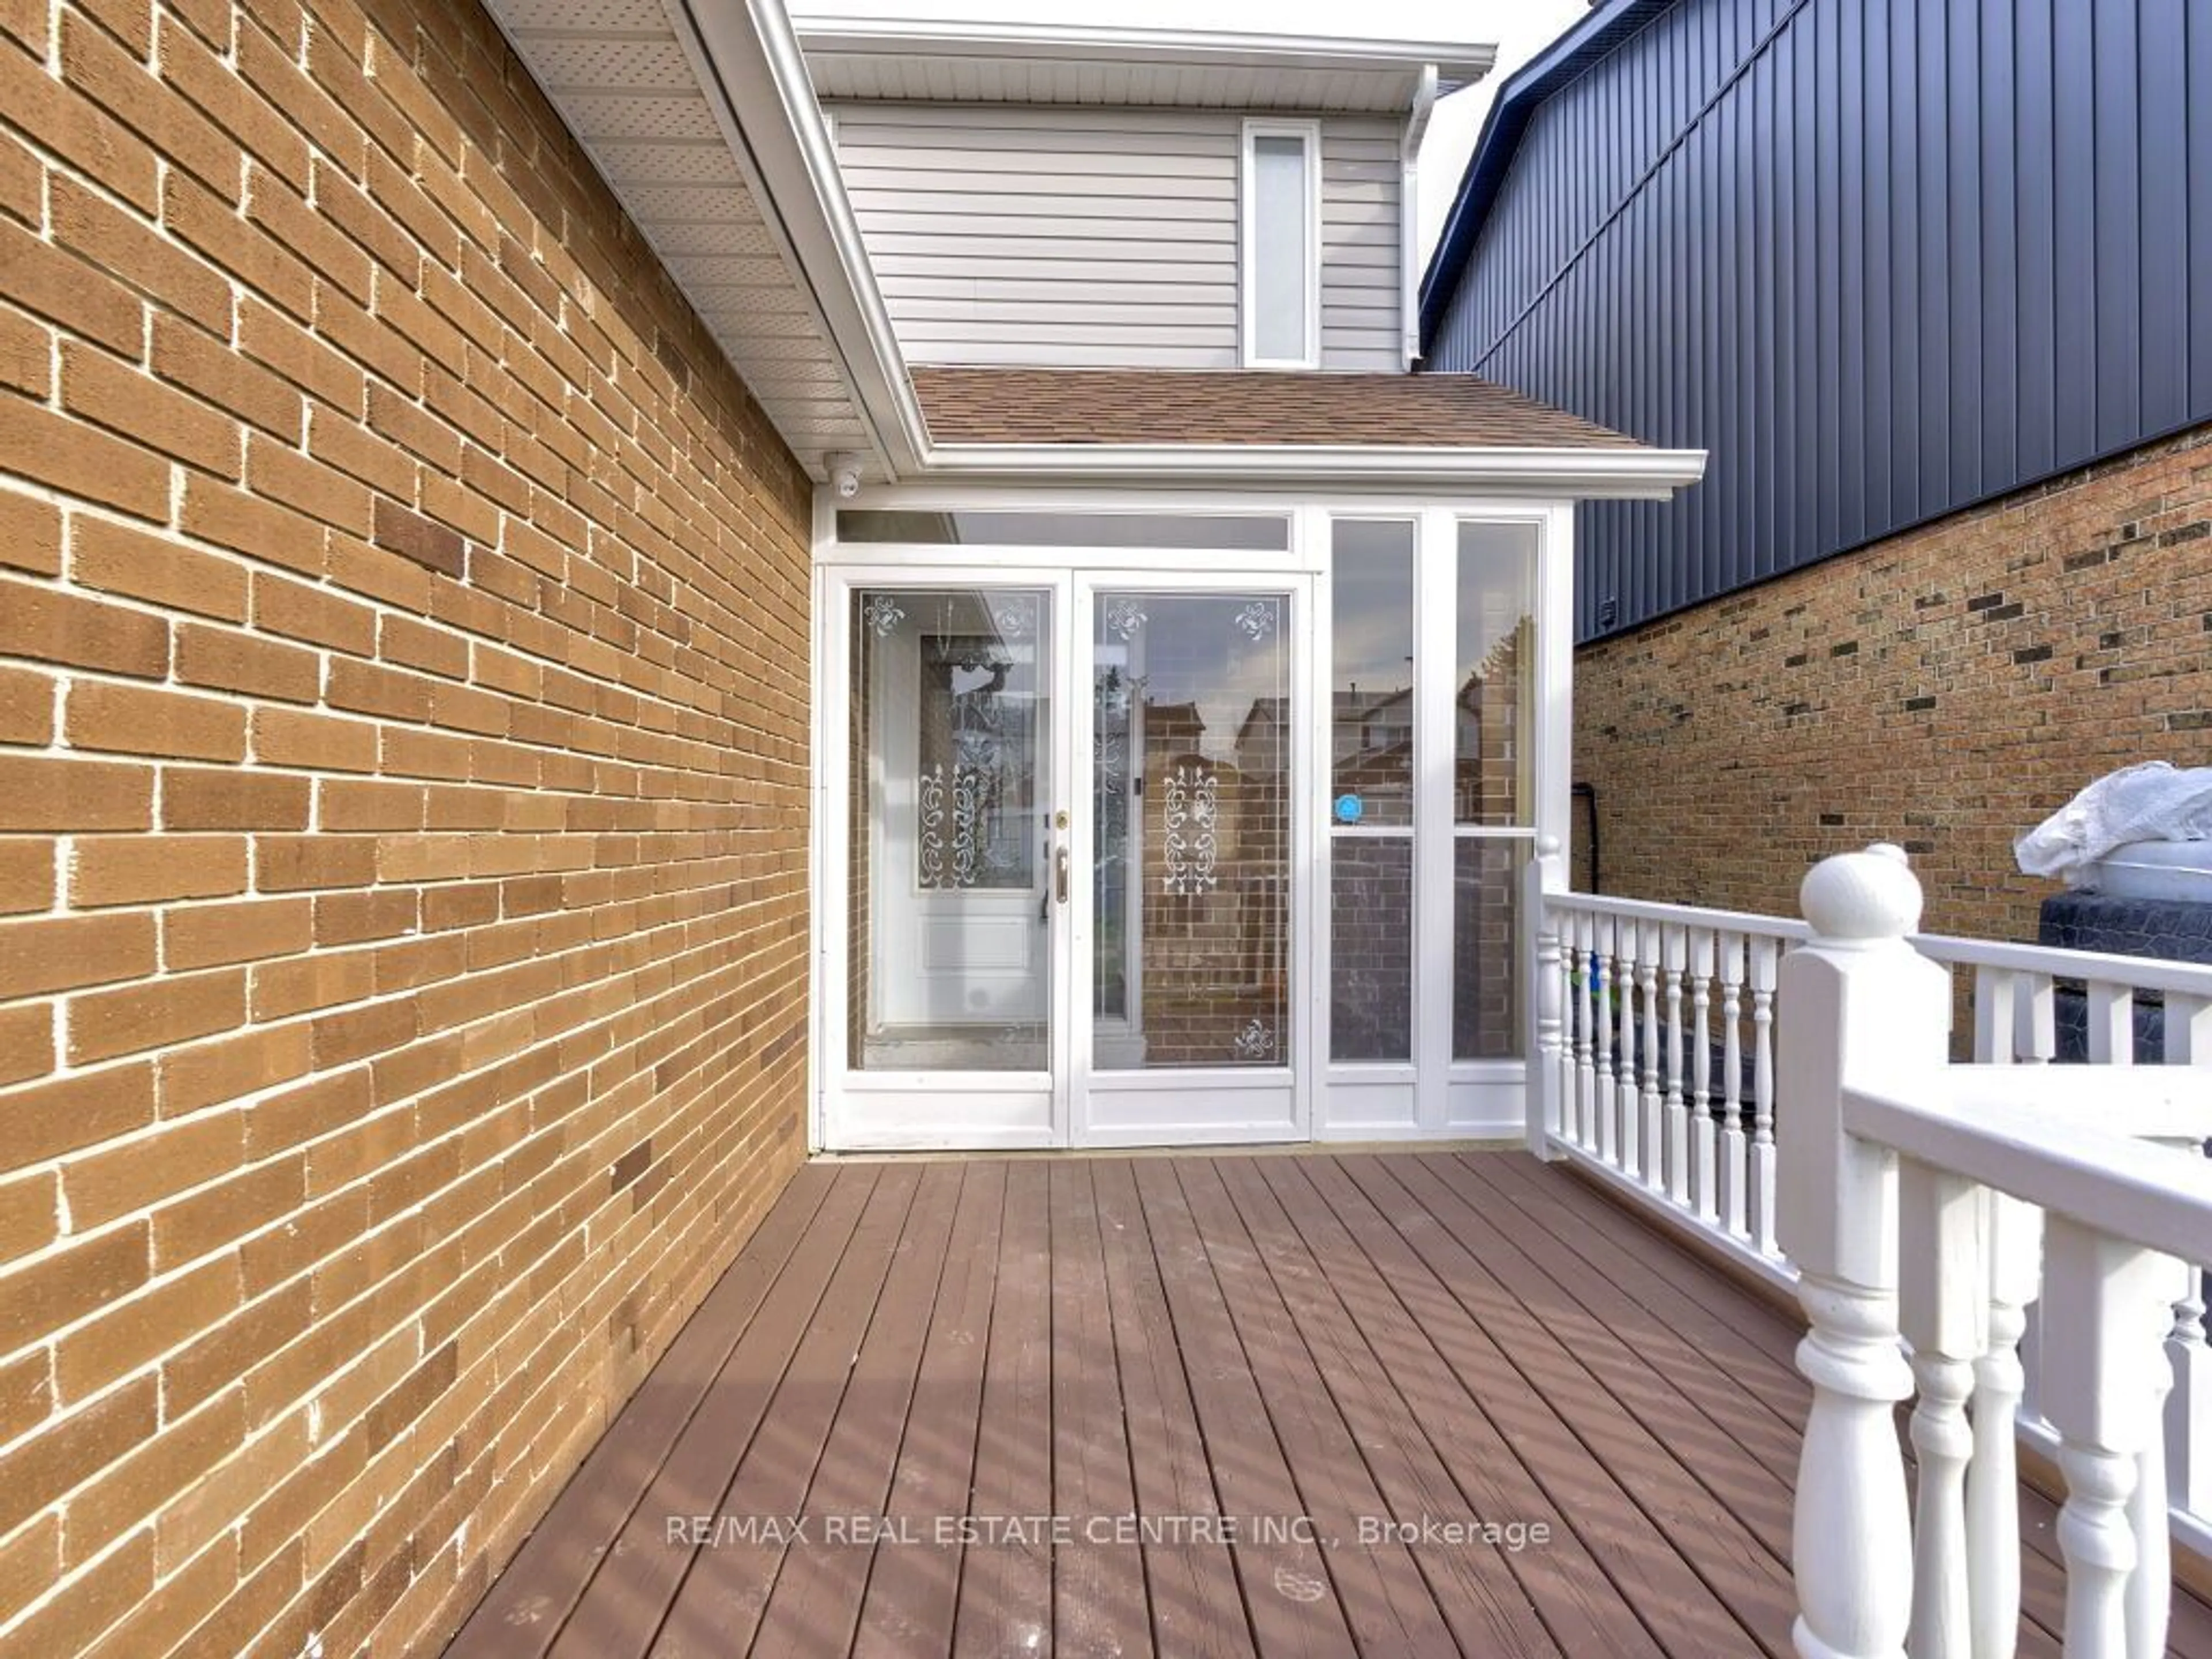 Home with brick exterior material for 370 Hansen Rd, Brampton Ontario L6V 3P7